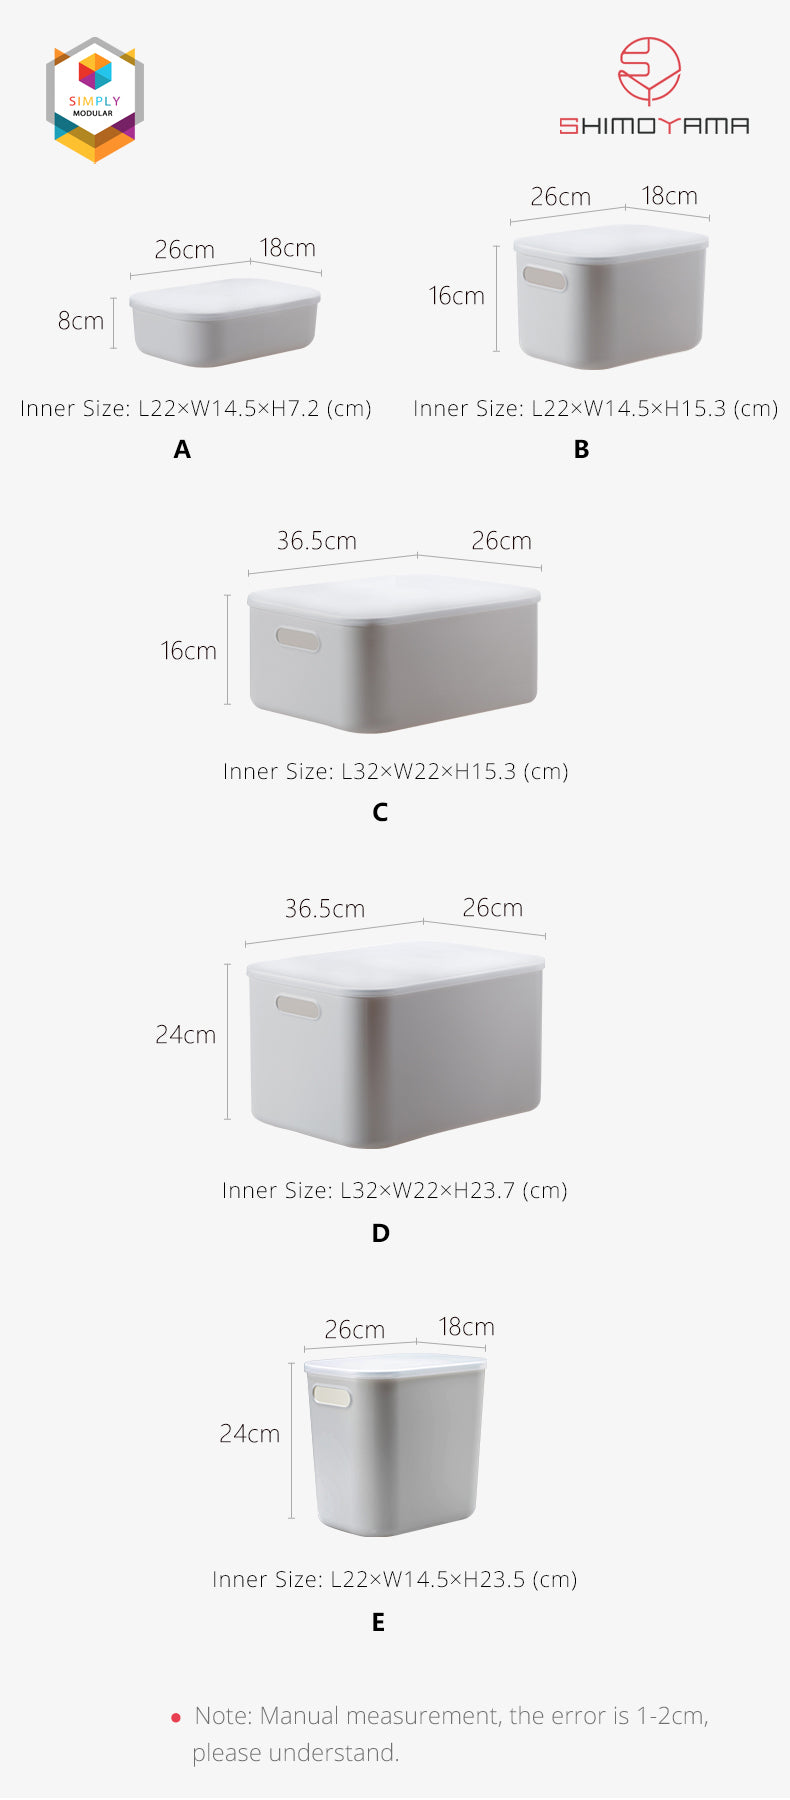 Simply Modular - Shimoyama Small Gray Flat Storage Box with Lid (4844148490274)